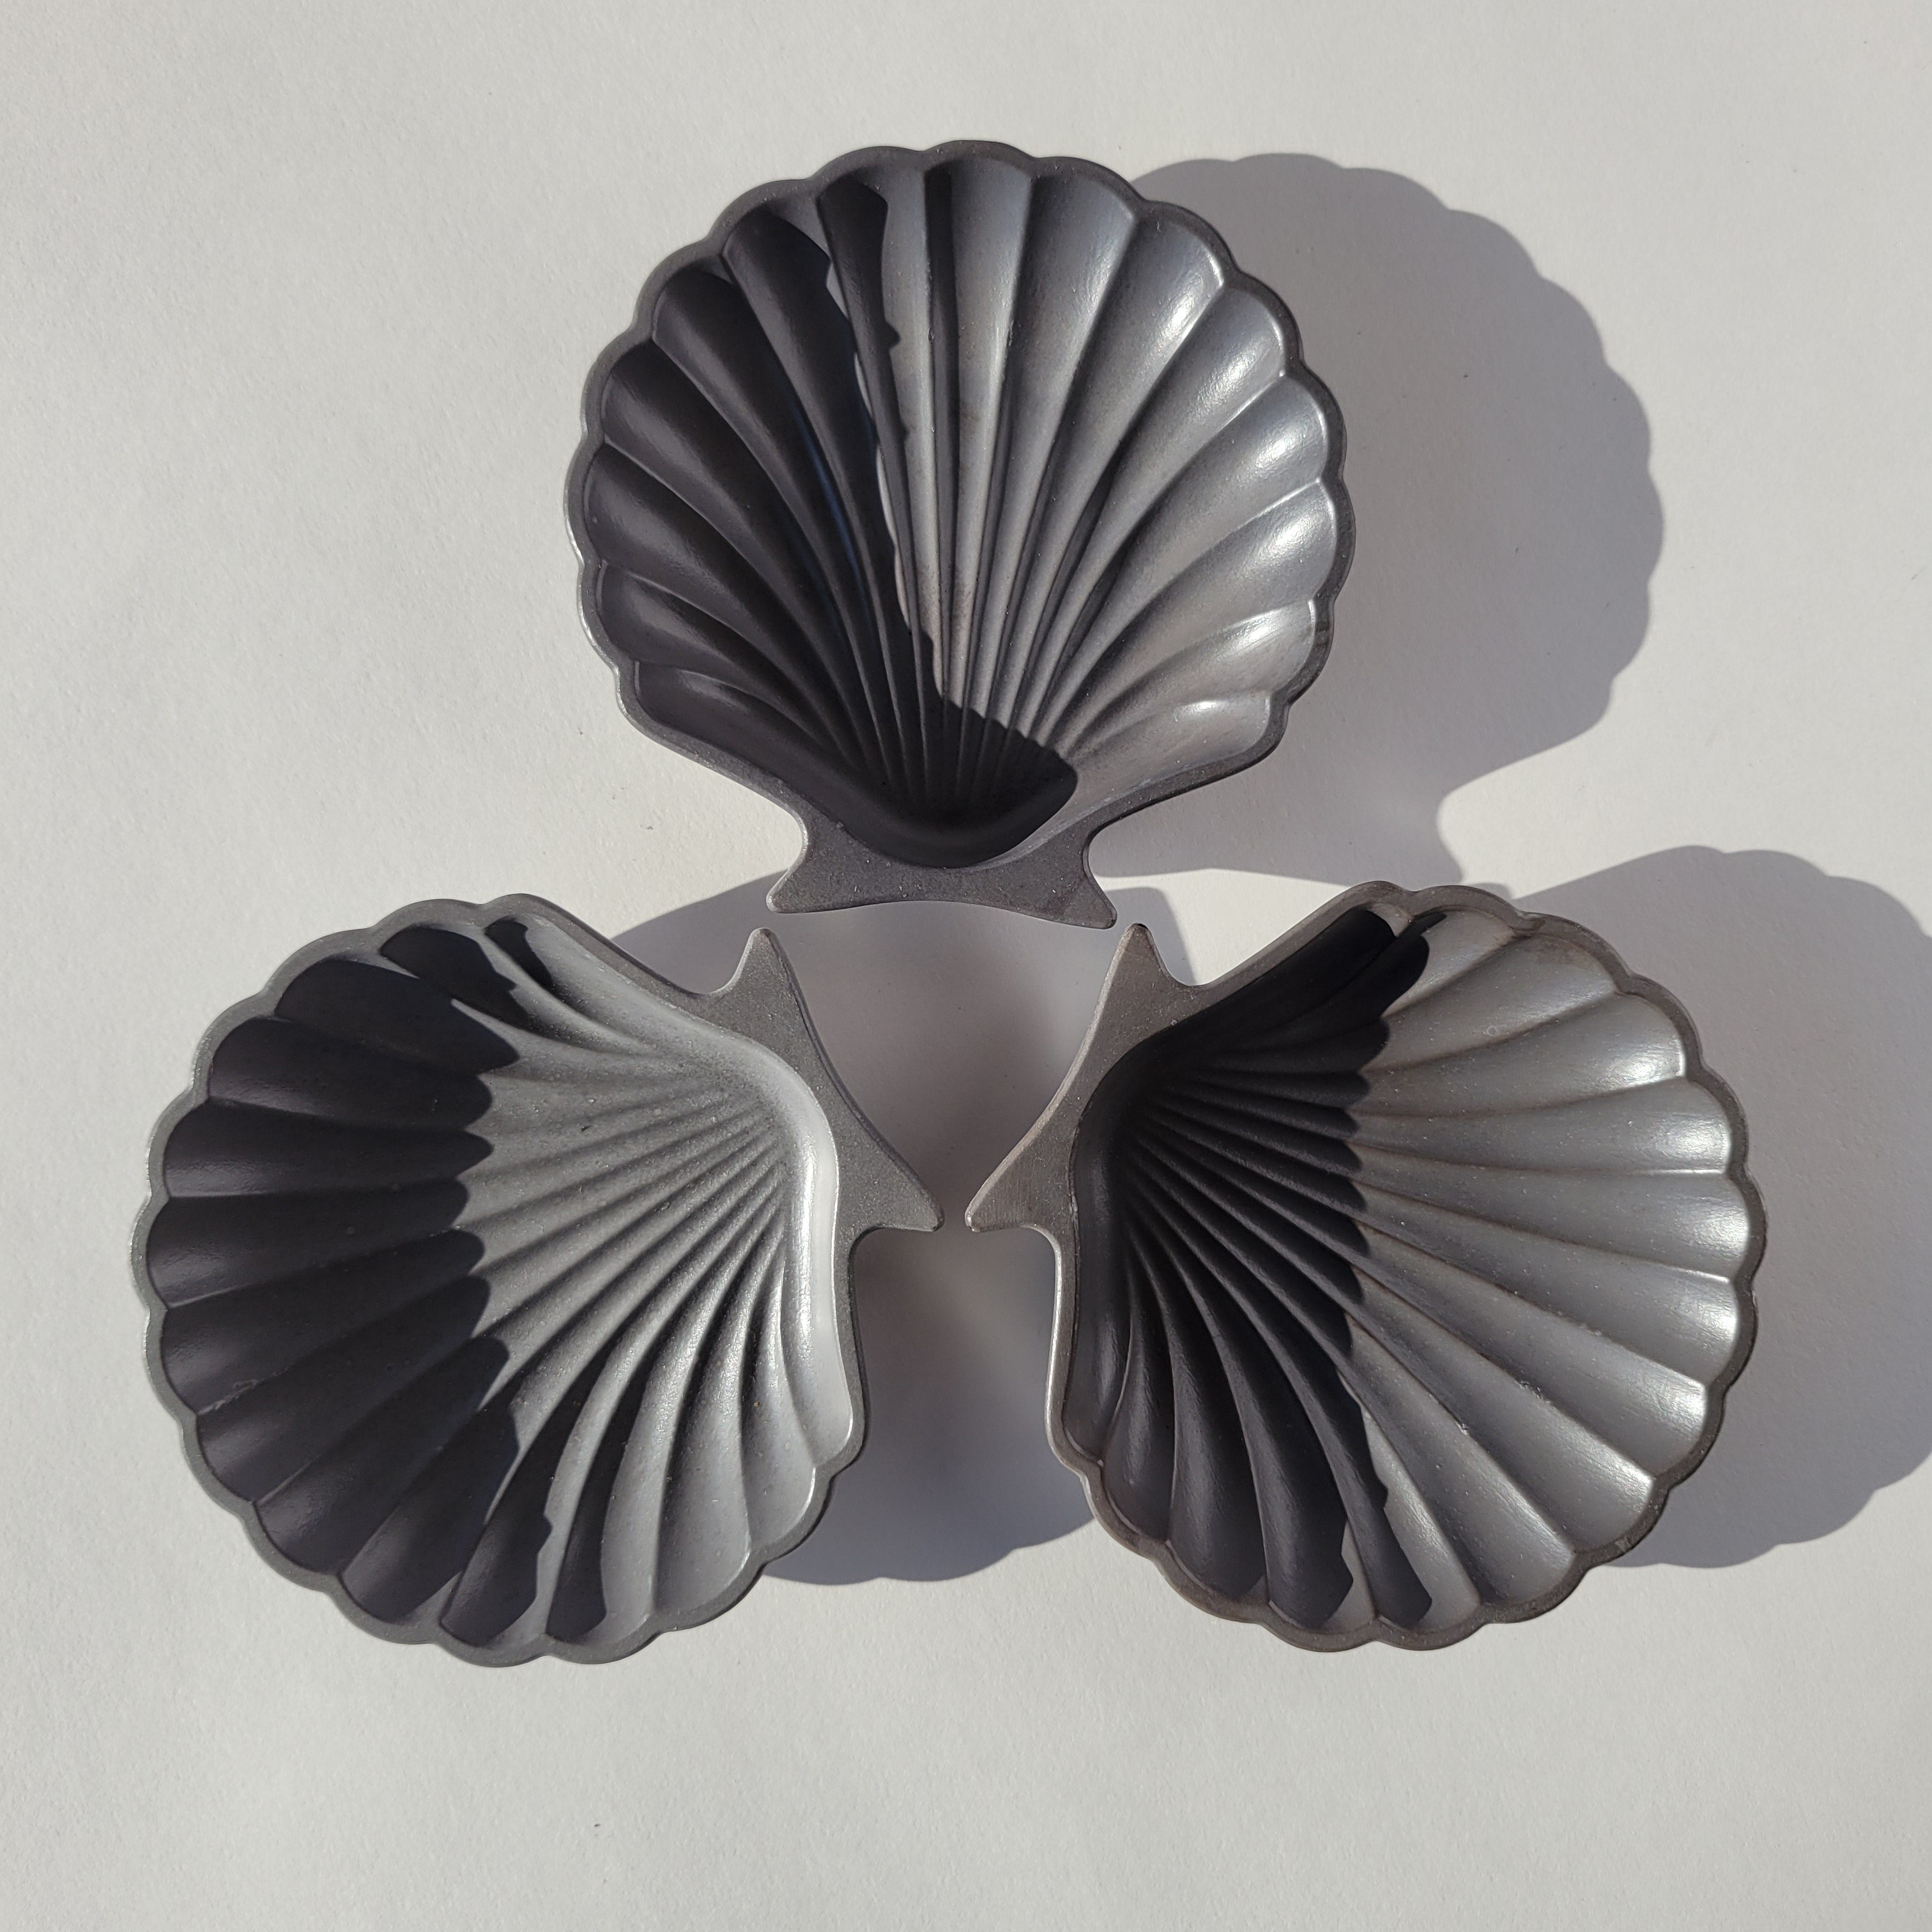 Object #6 - Seashell Trinket Dish